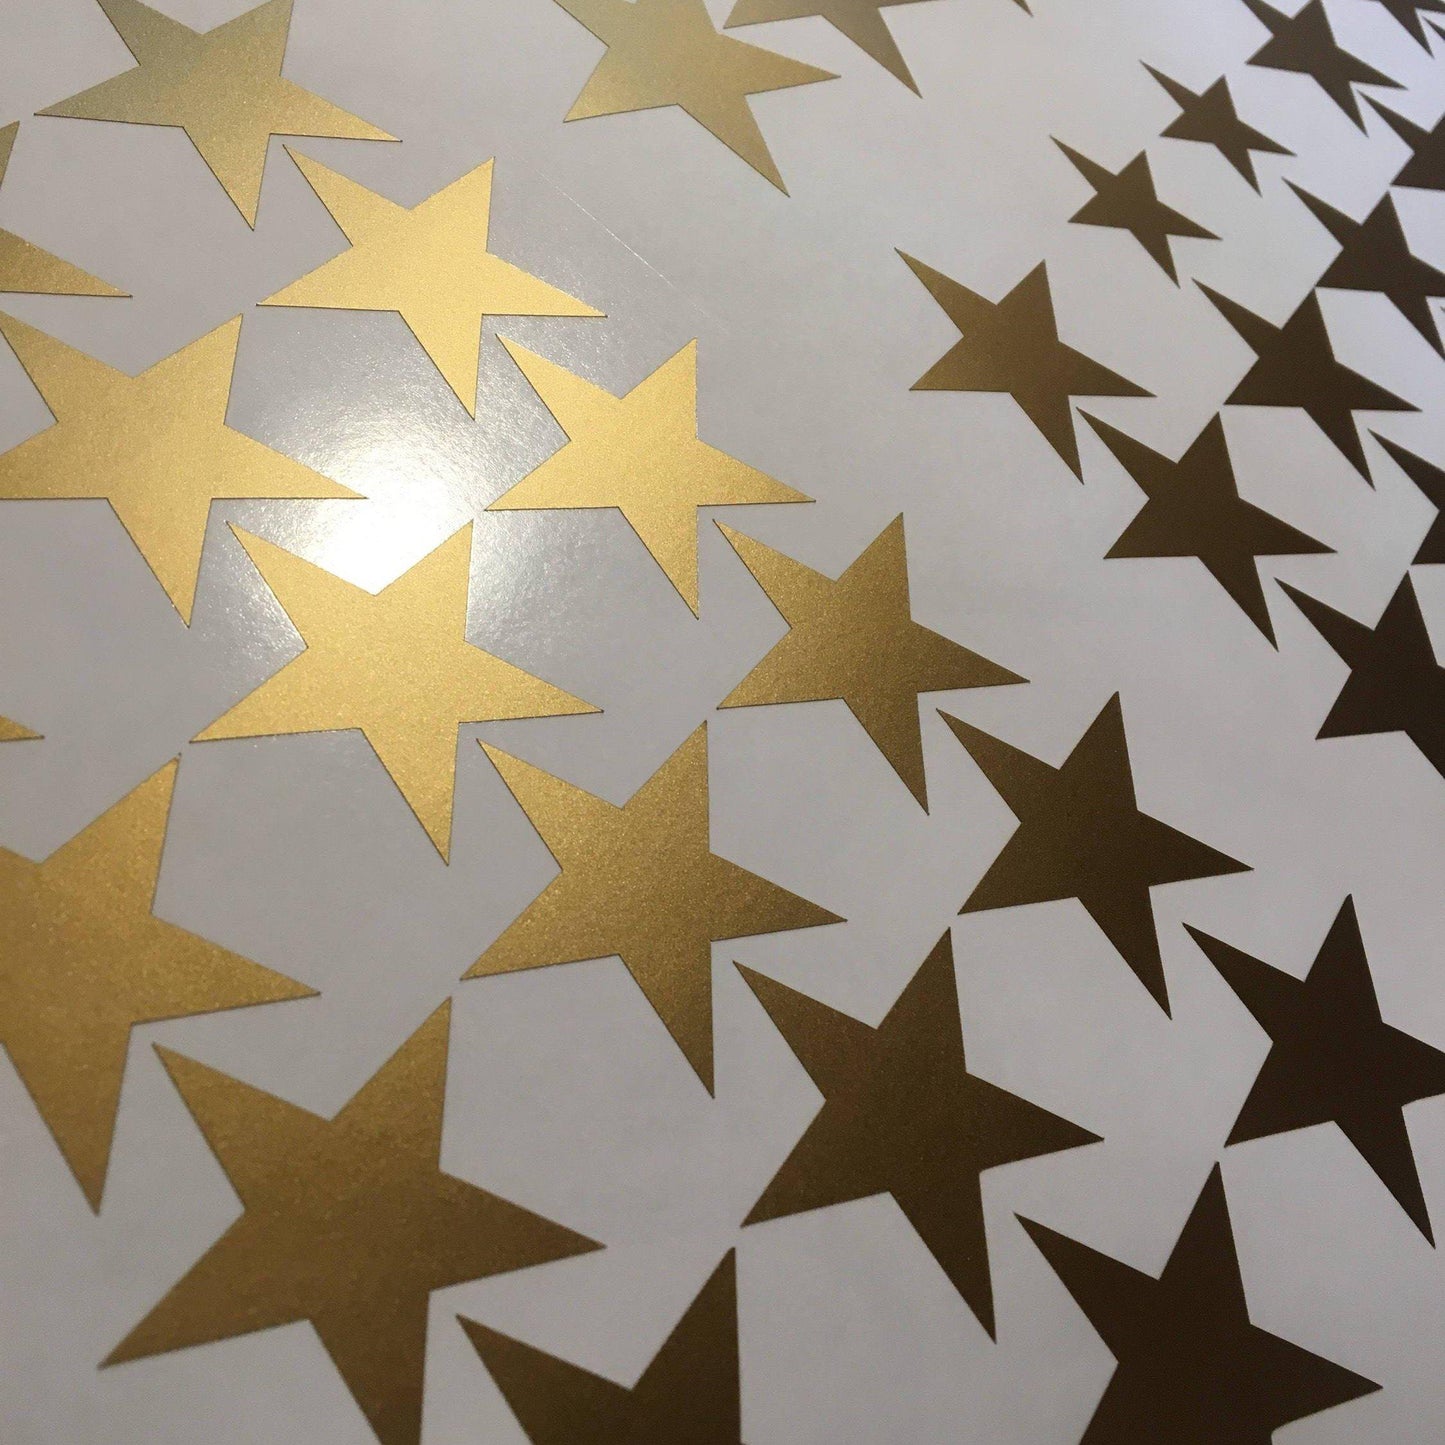 120 Gold Metallic Star Wall Stickers